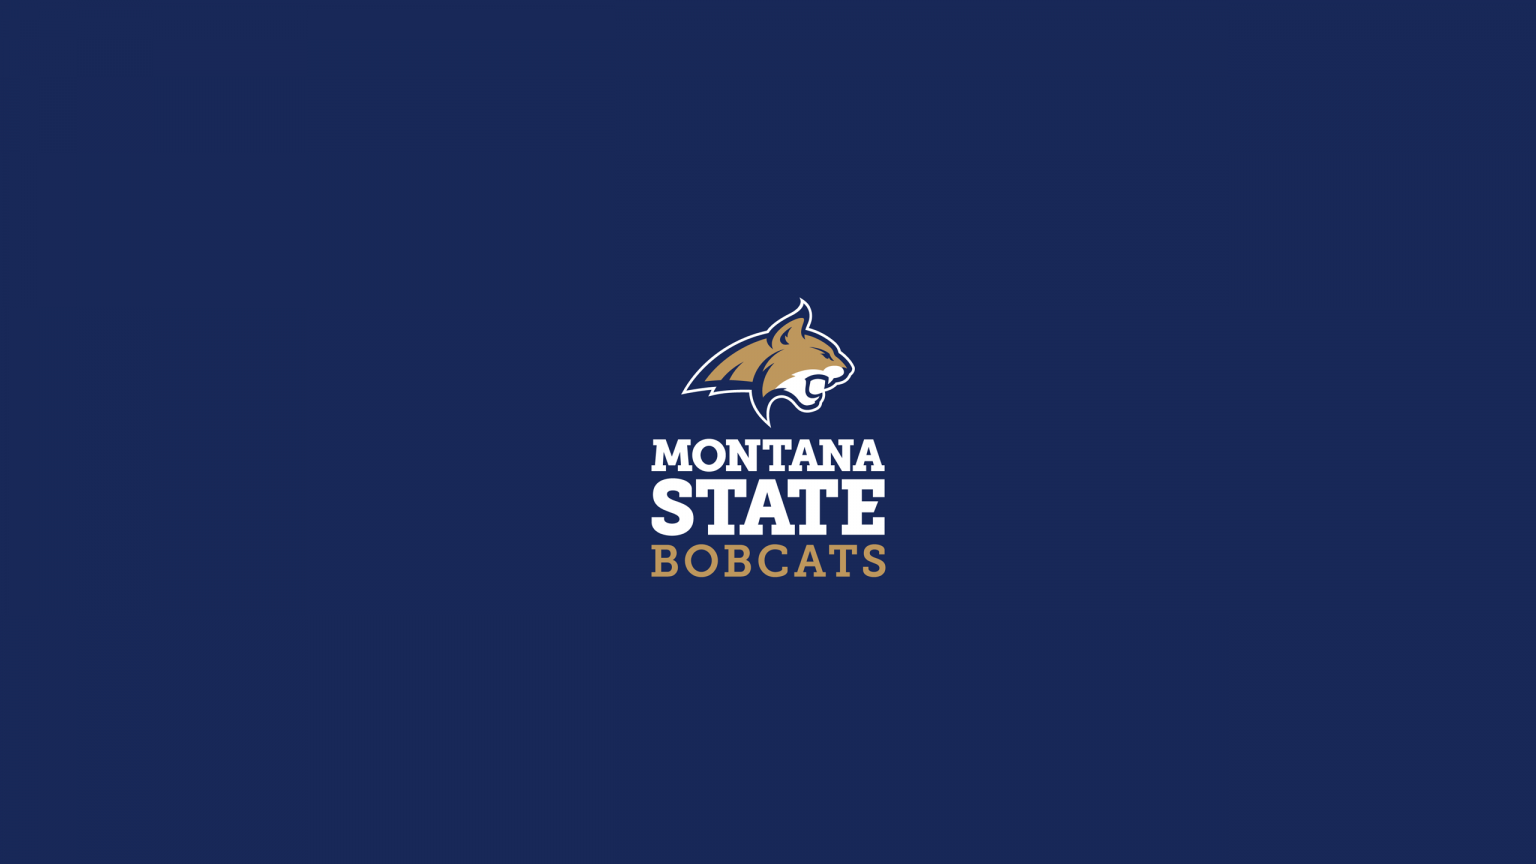 Montana State Bobcats Basketball - NCAAB - Square Bettor